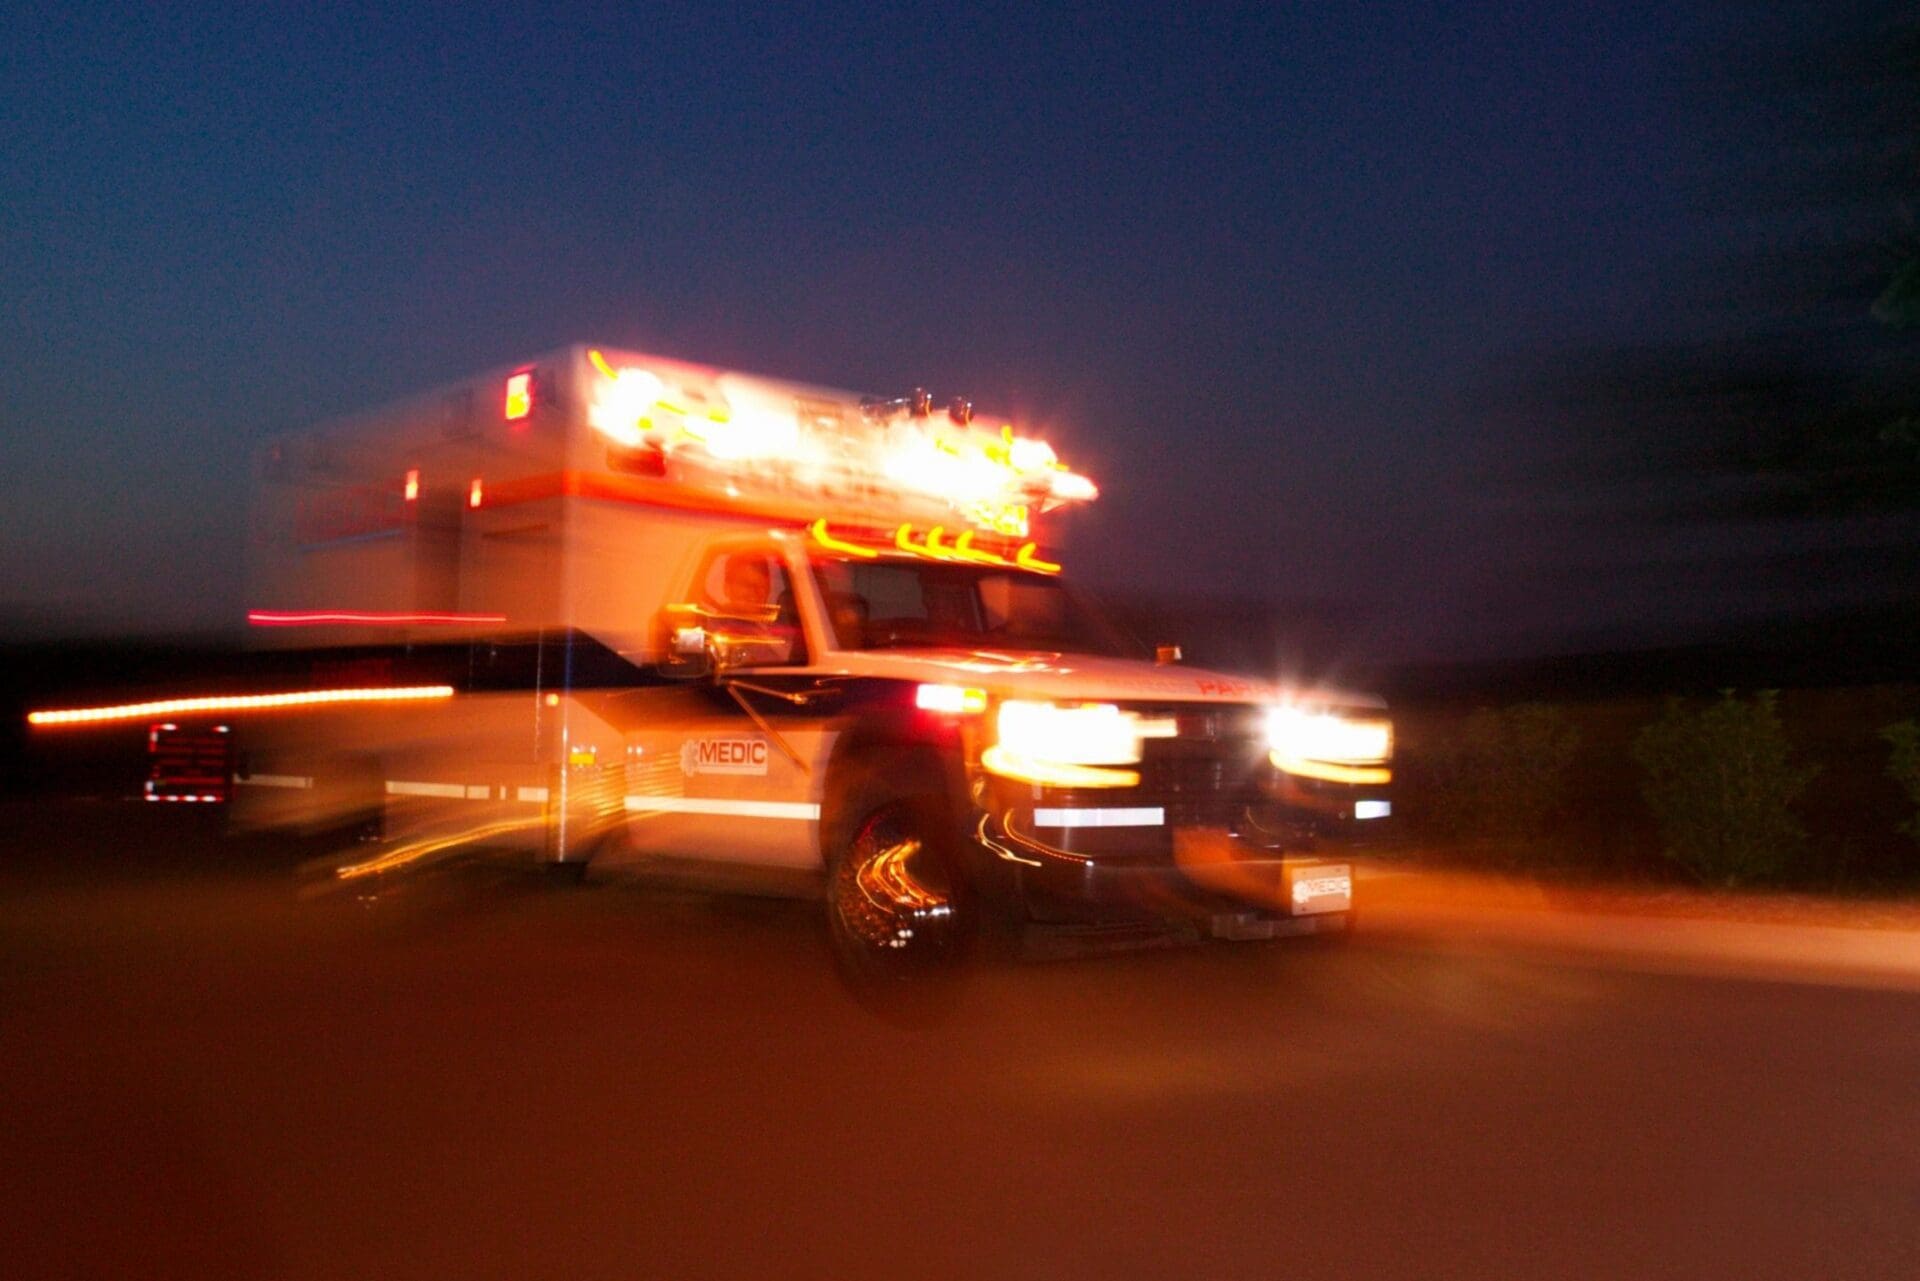 A blurry image of an ambulance truck.